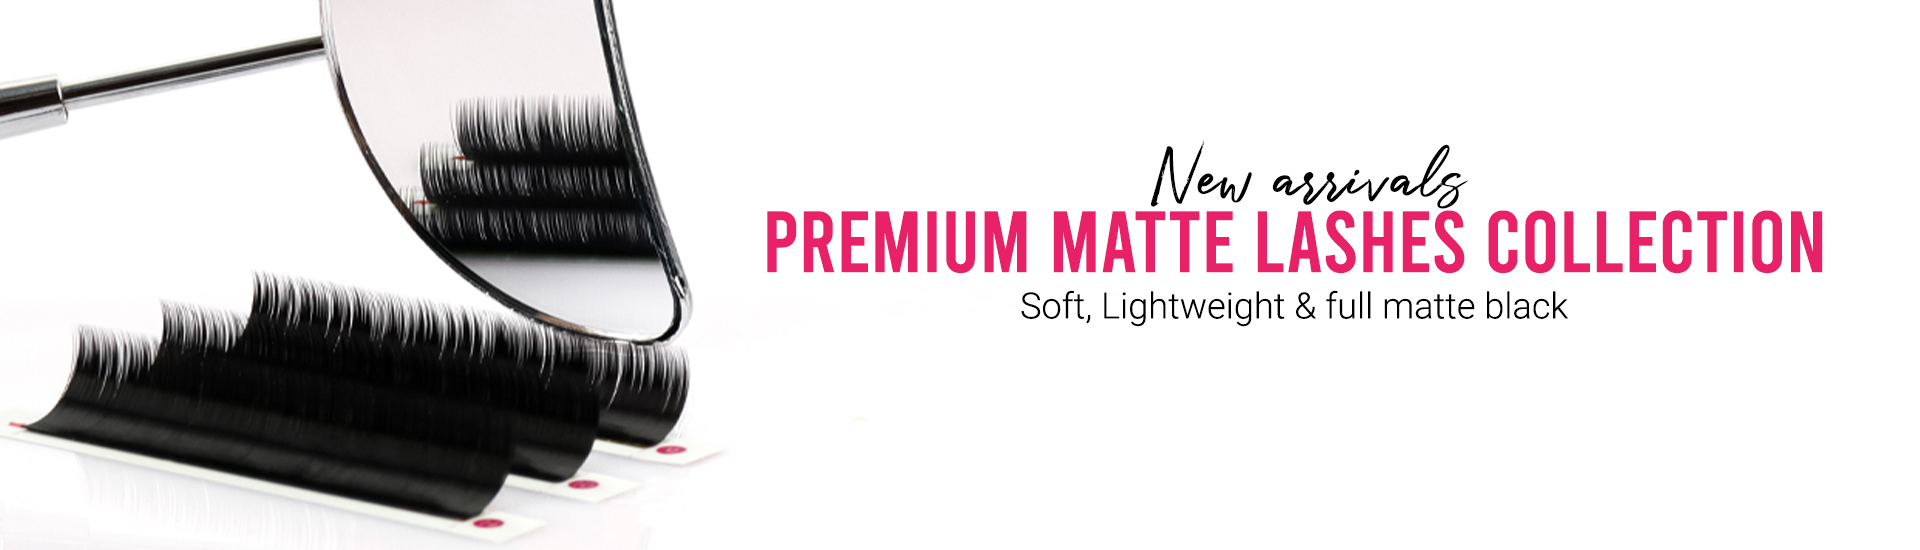 New arrivals PREMIUM MATTE LASHES COLLECTION Soft, Lightweight & full matte black